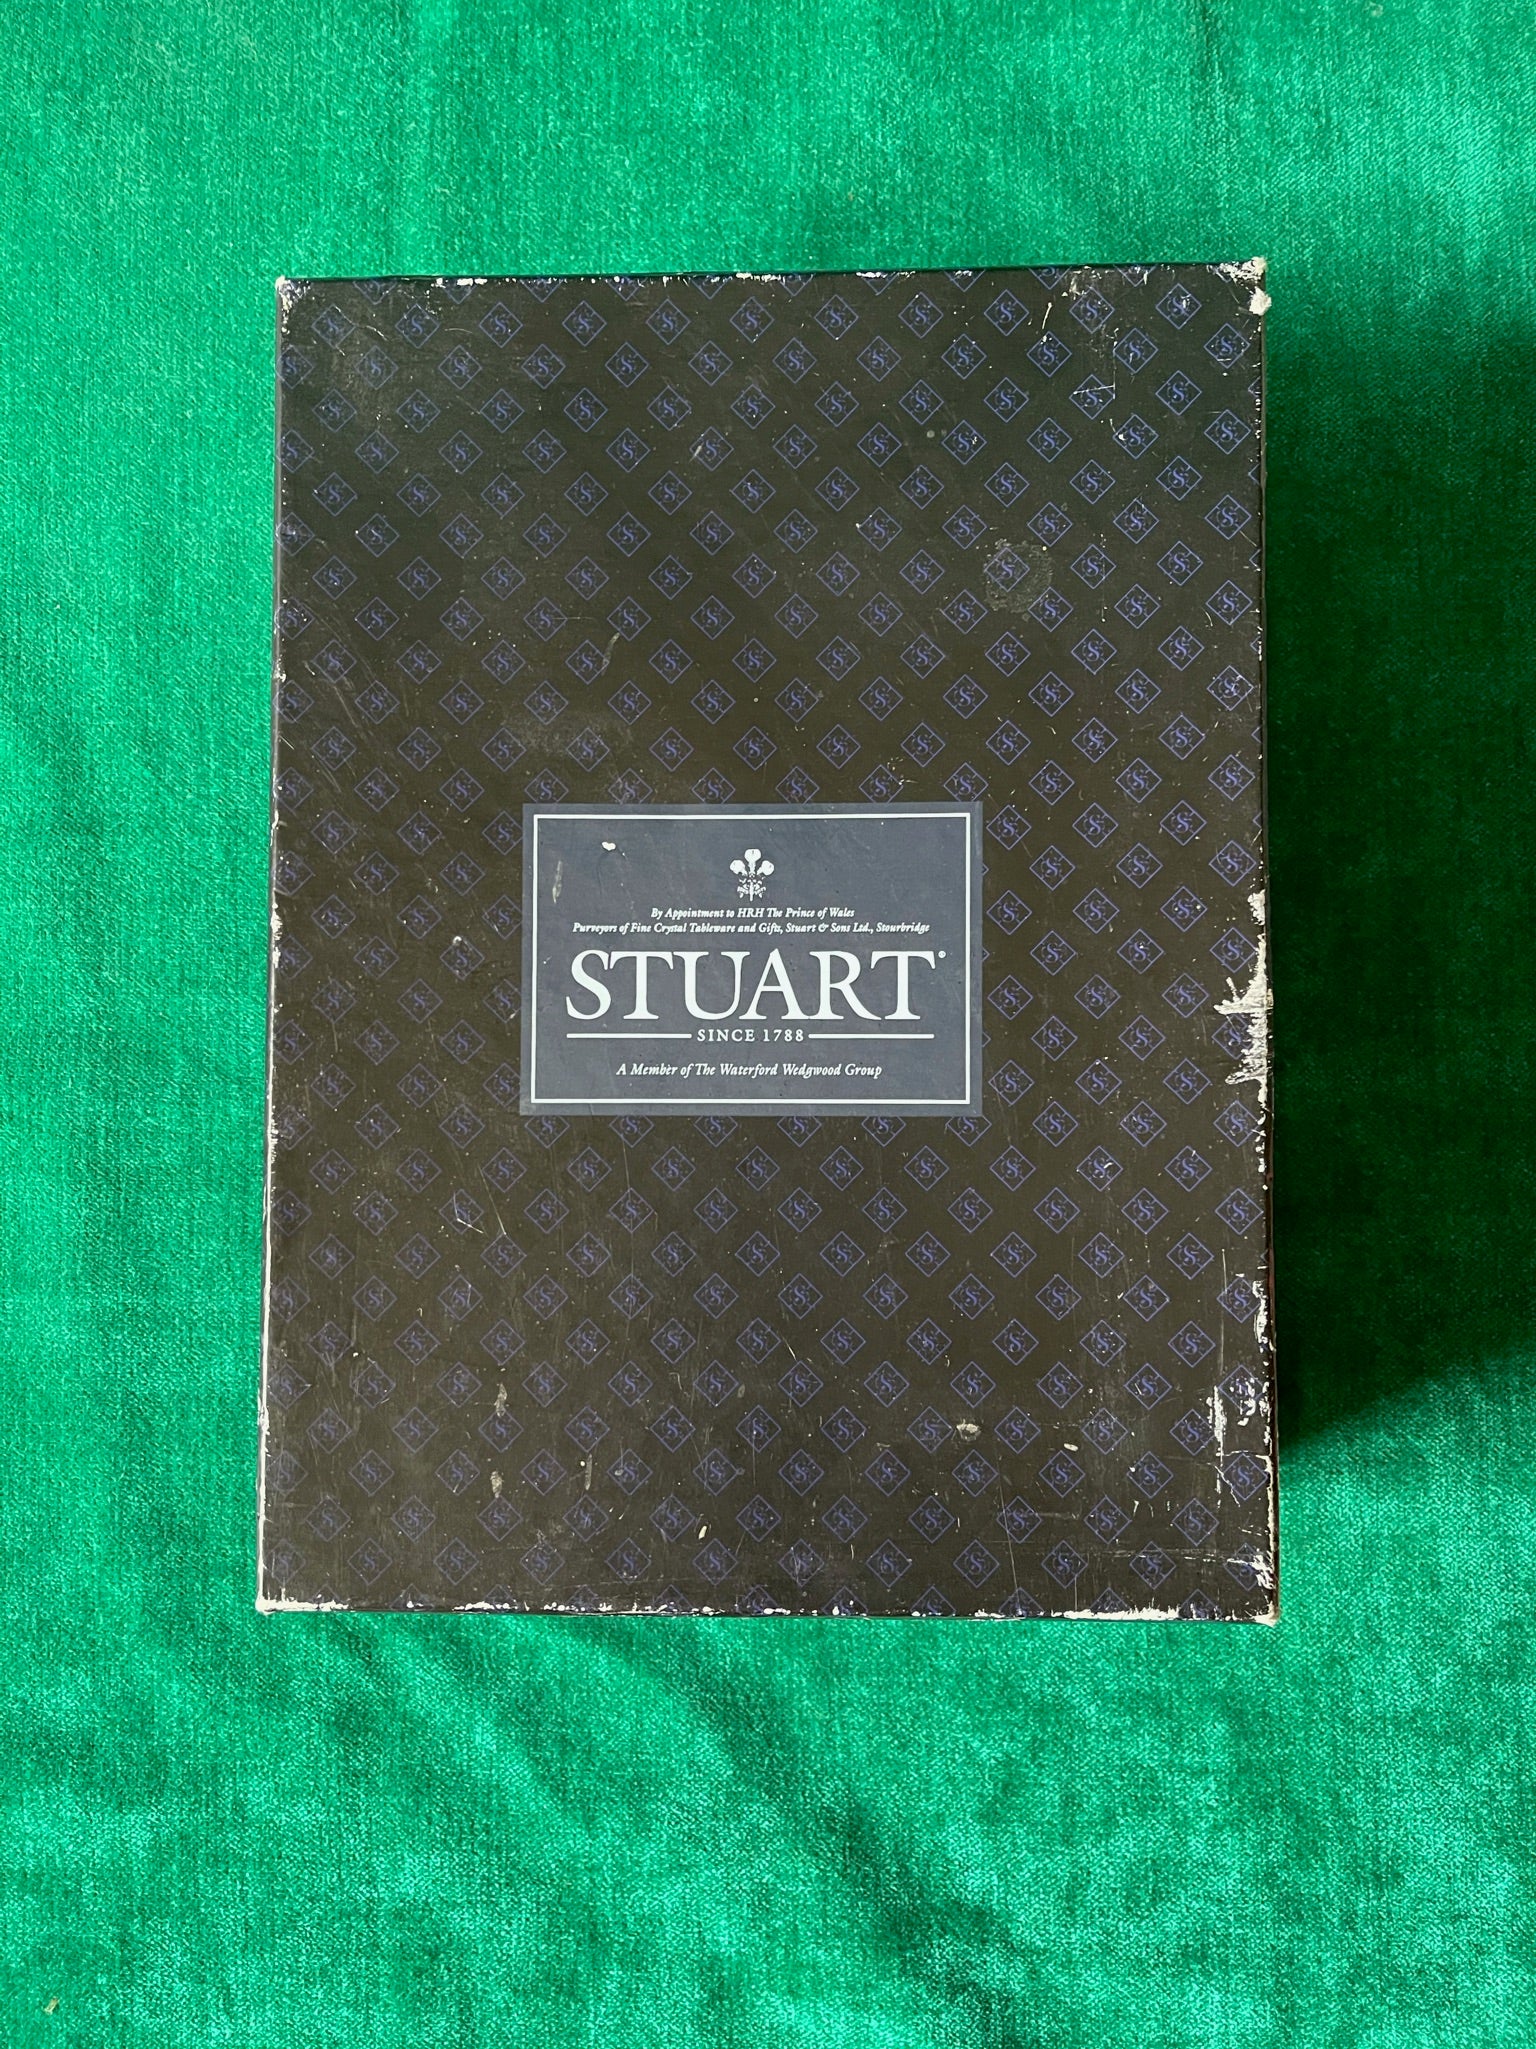 Pair of Vintage Stuart Crystal Champagne Flute